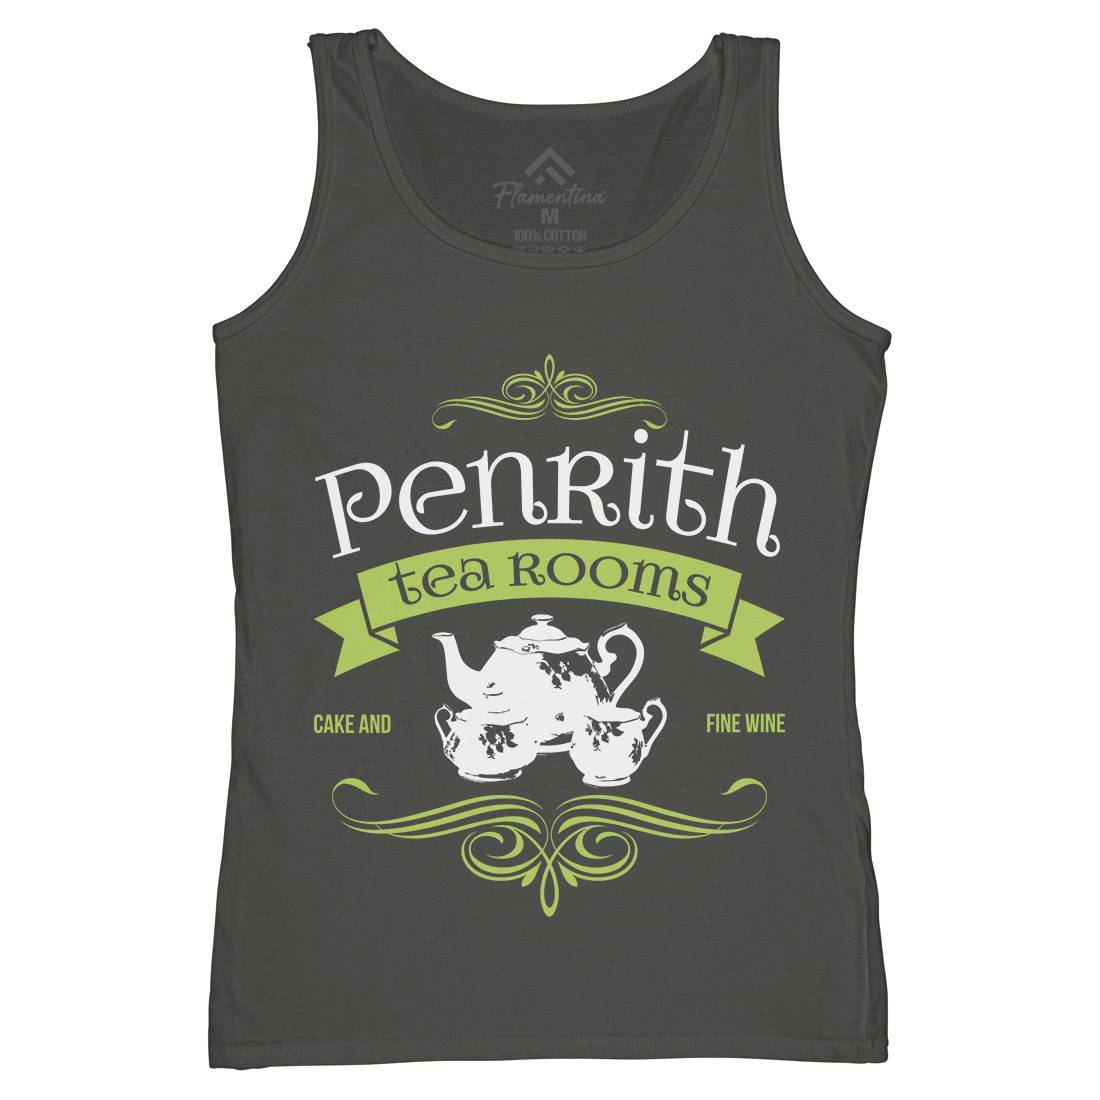 Penrith Tea Rooms Womens Organic Tank Top Vest Food D374